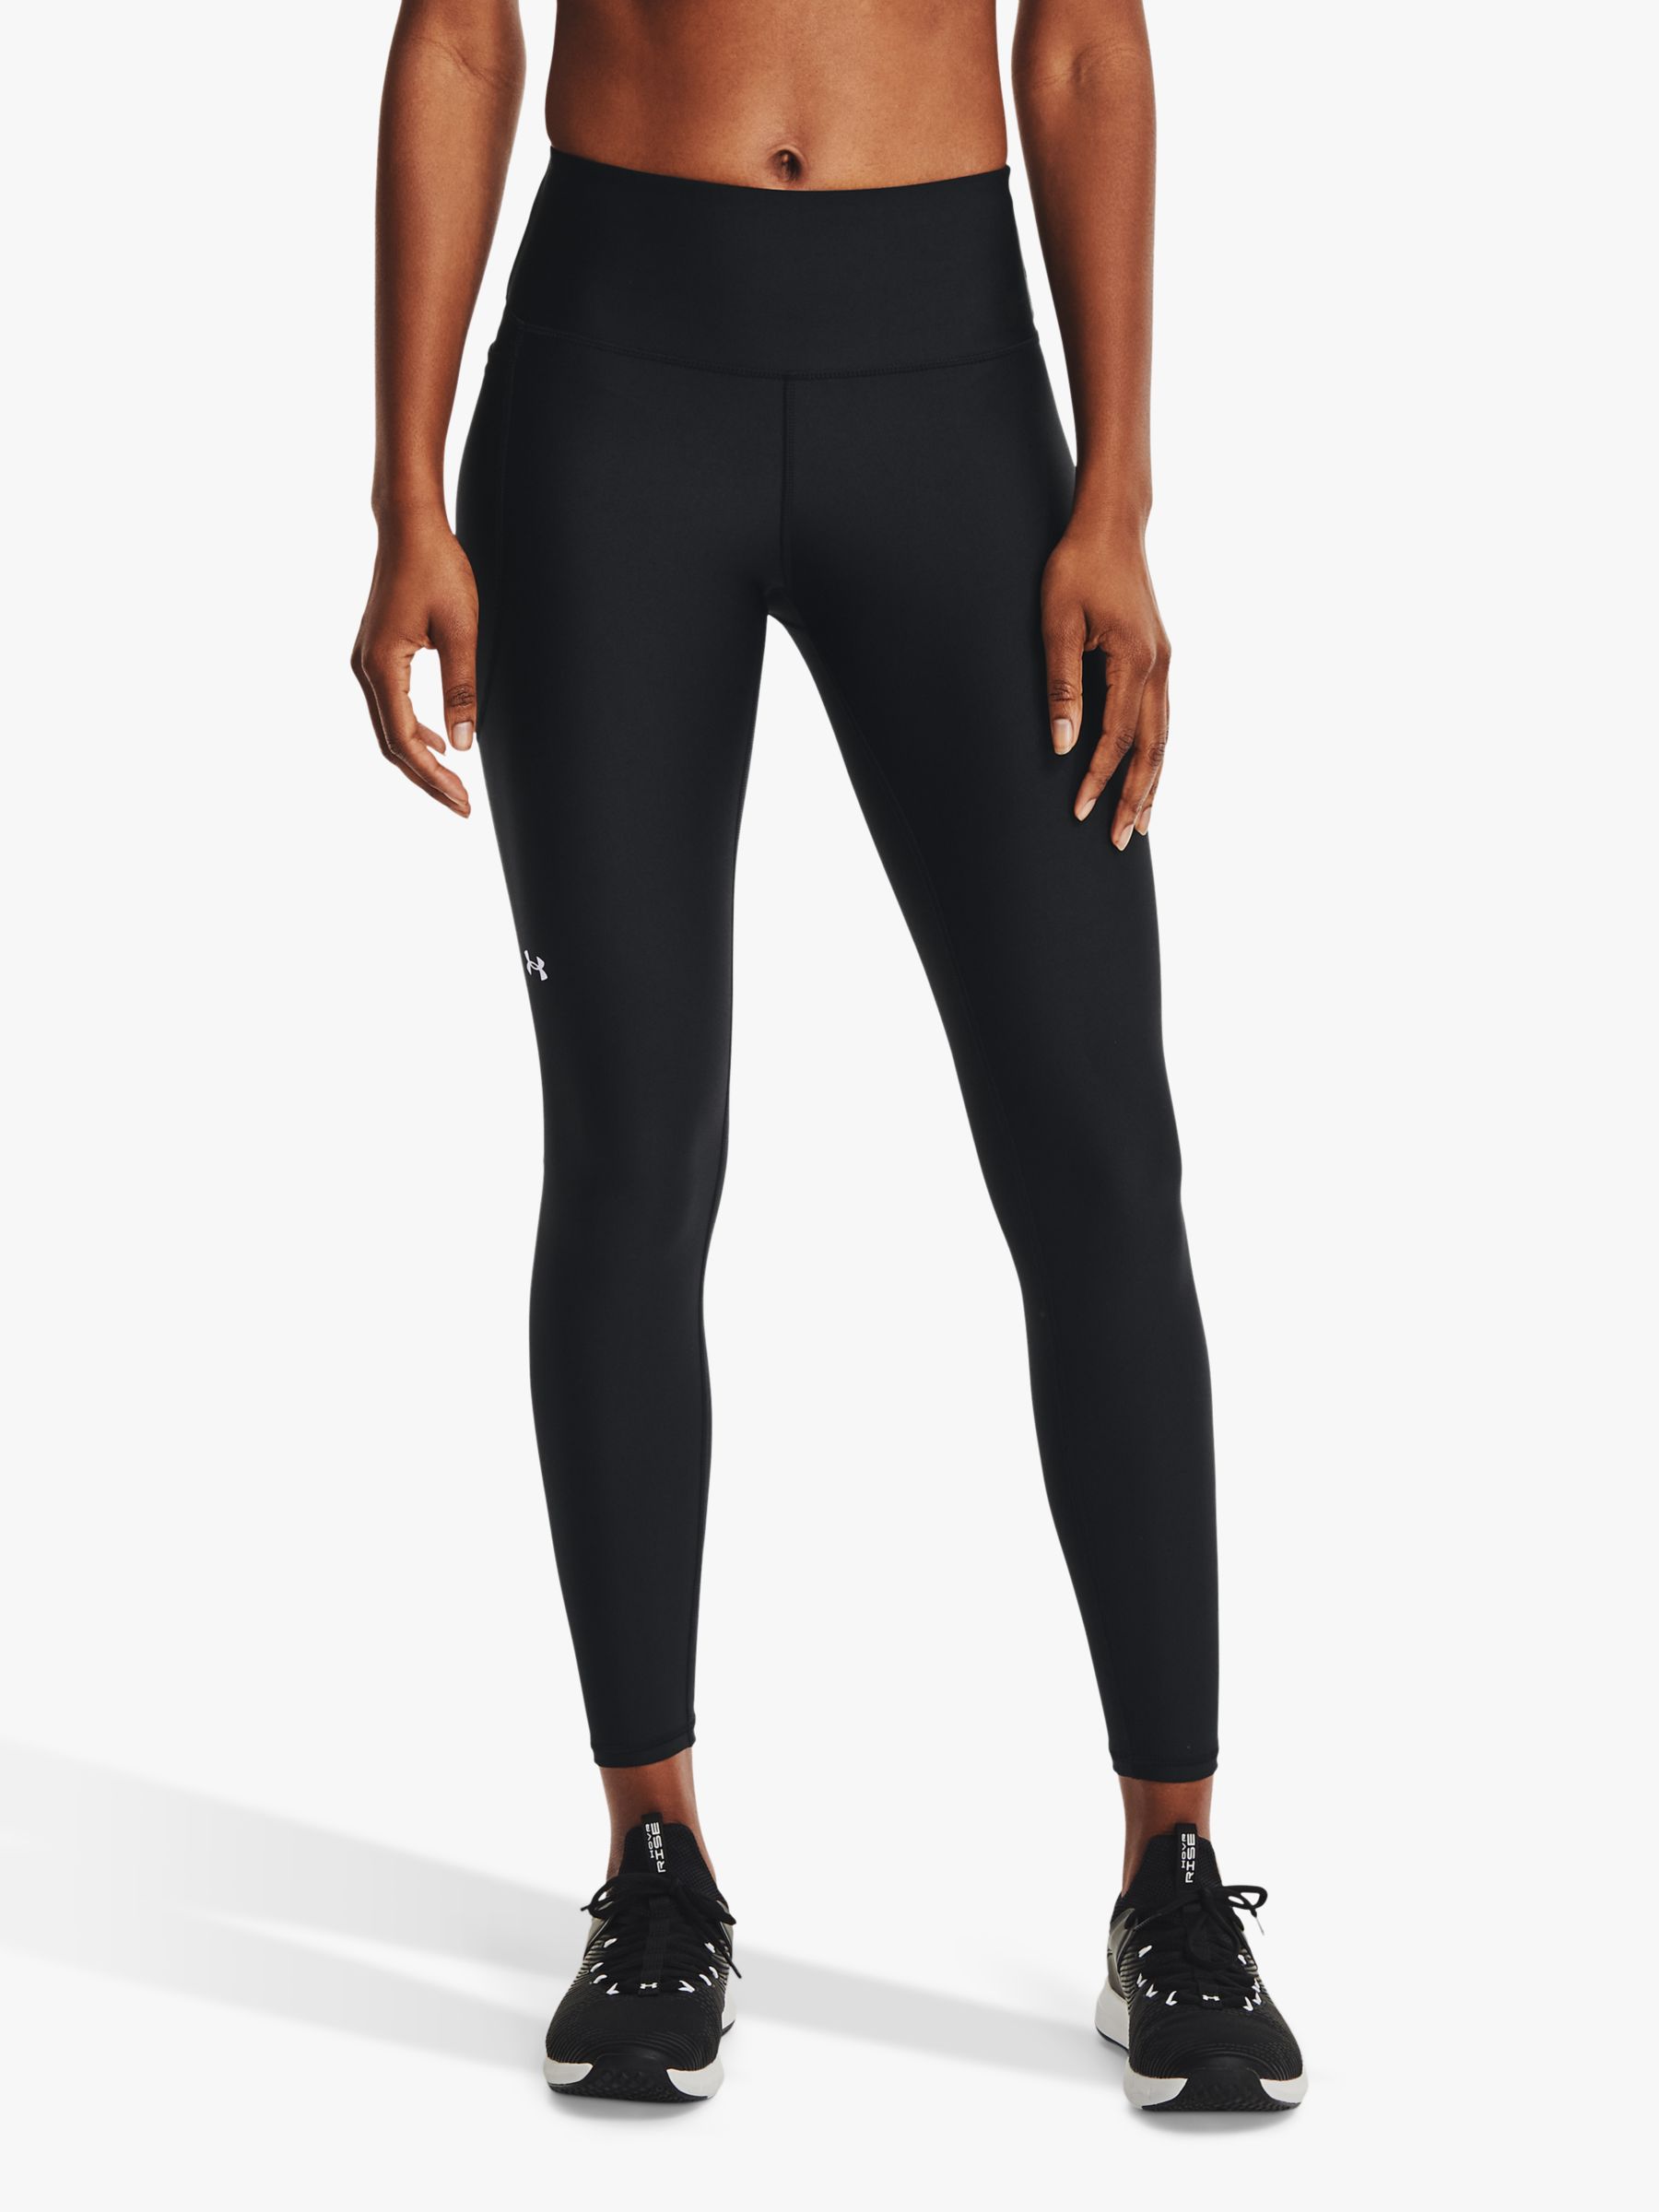  HG Armour HiRise 7/8 NS, Black - women's compression  leggings - UNDER ARMOUR - 36.01 € - outdoorové oblečení a vybavení shop